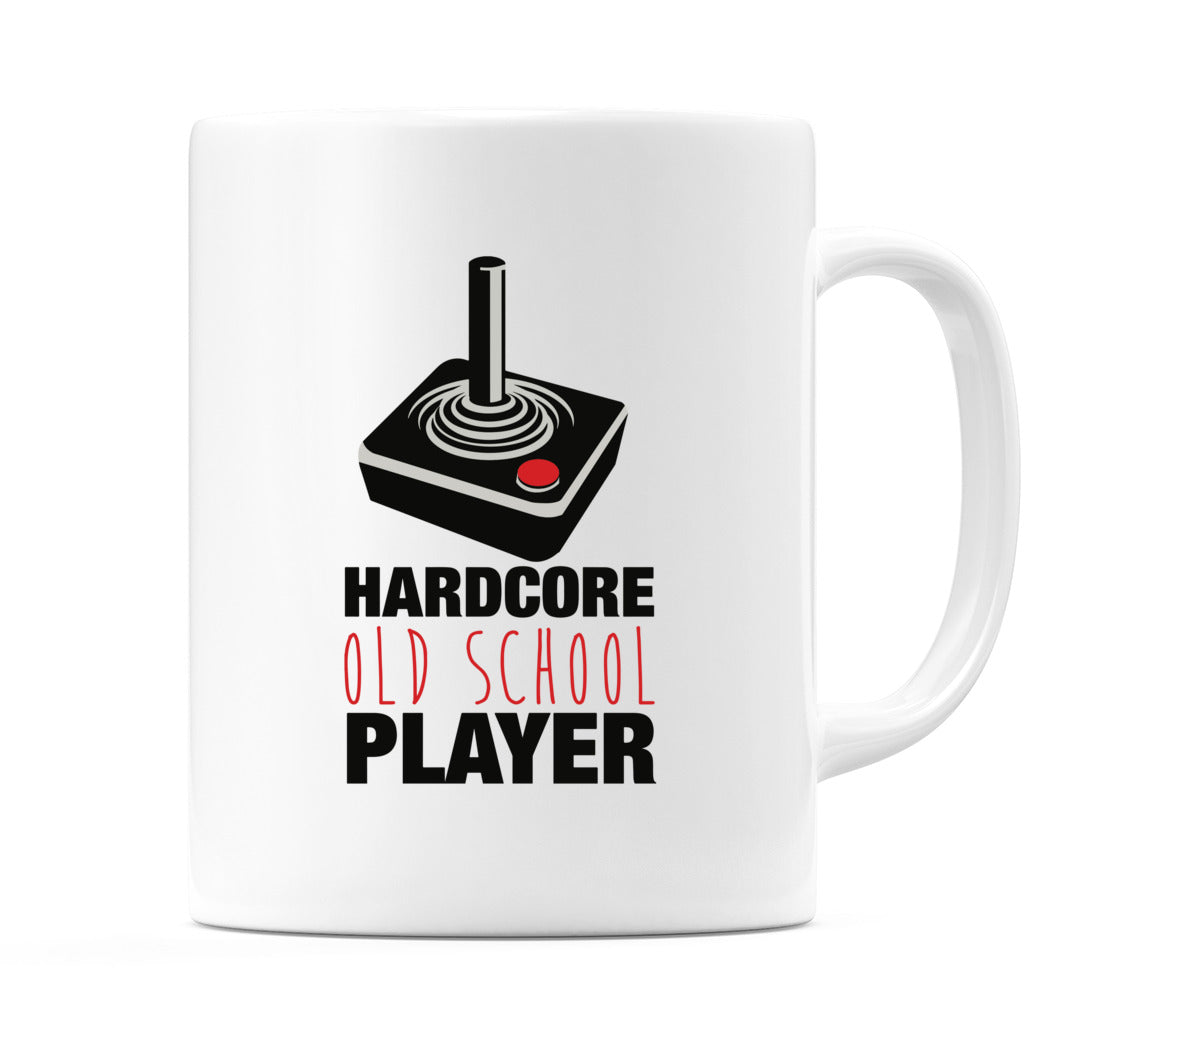 Hardcore Old School Player Mug